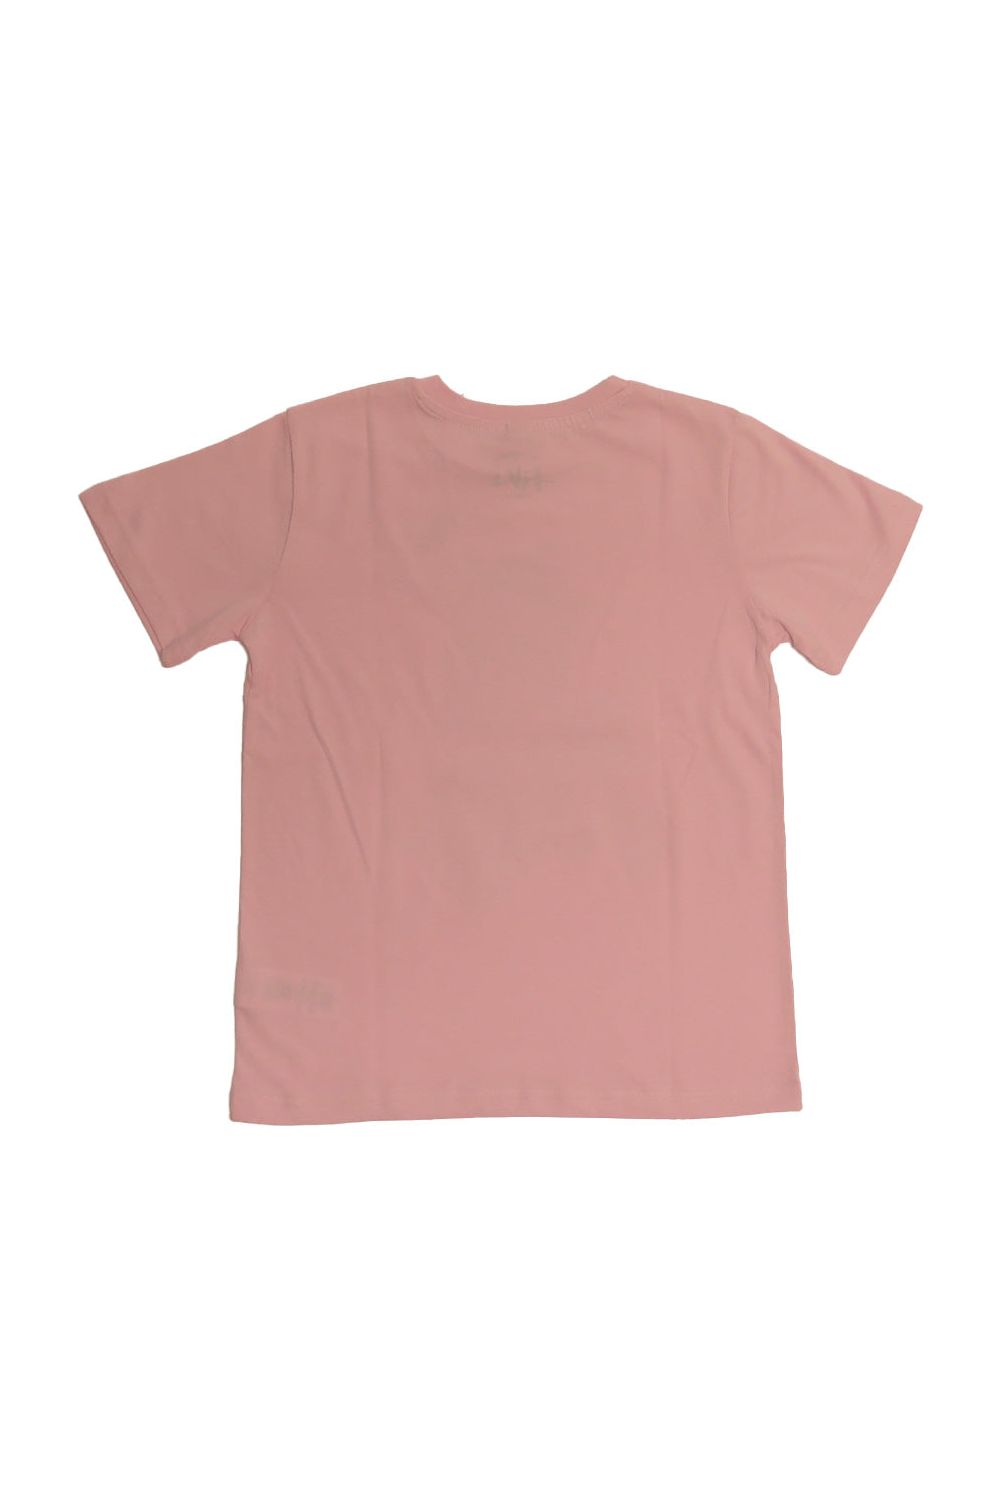 Tiki Man Youth Short Sleeve T-Shirt Pink